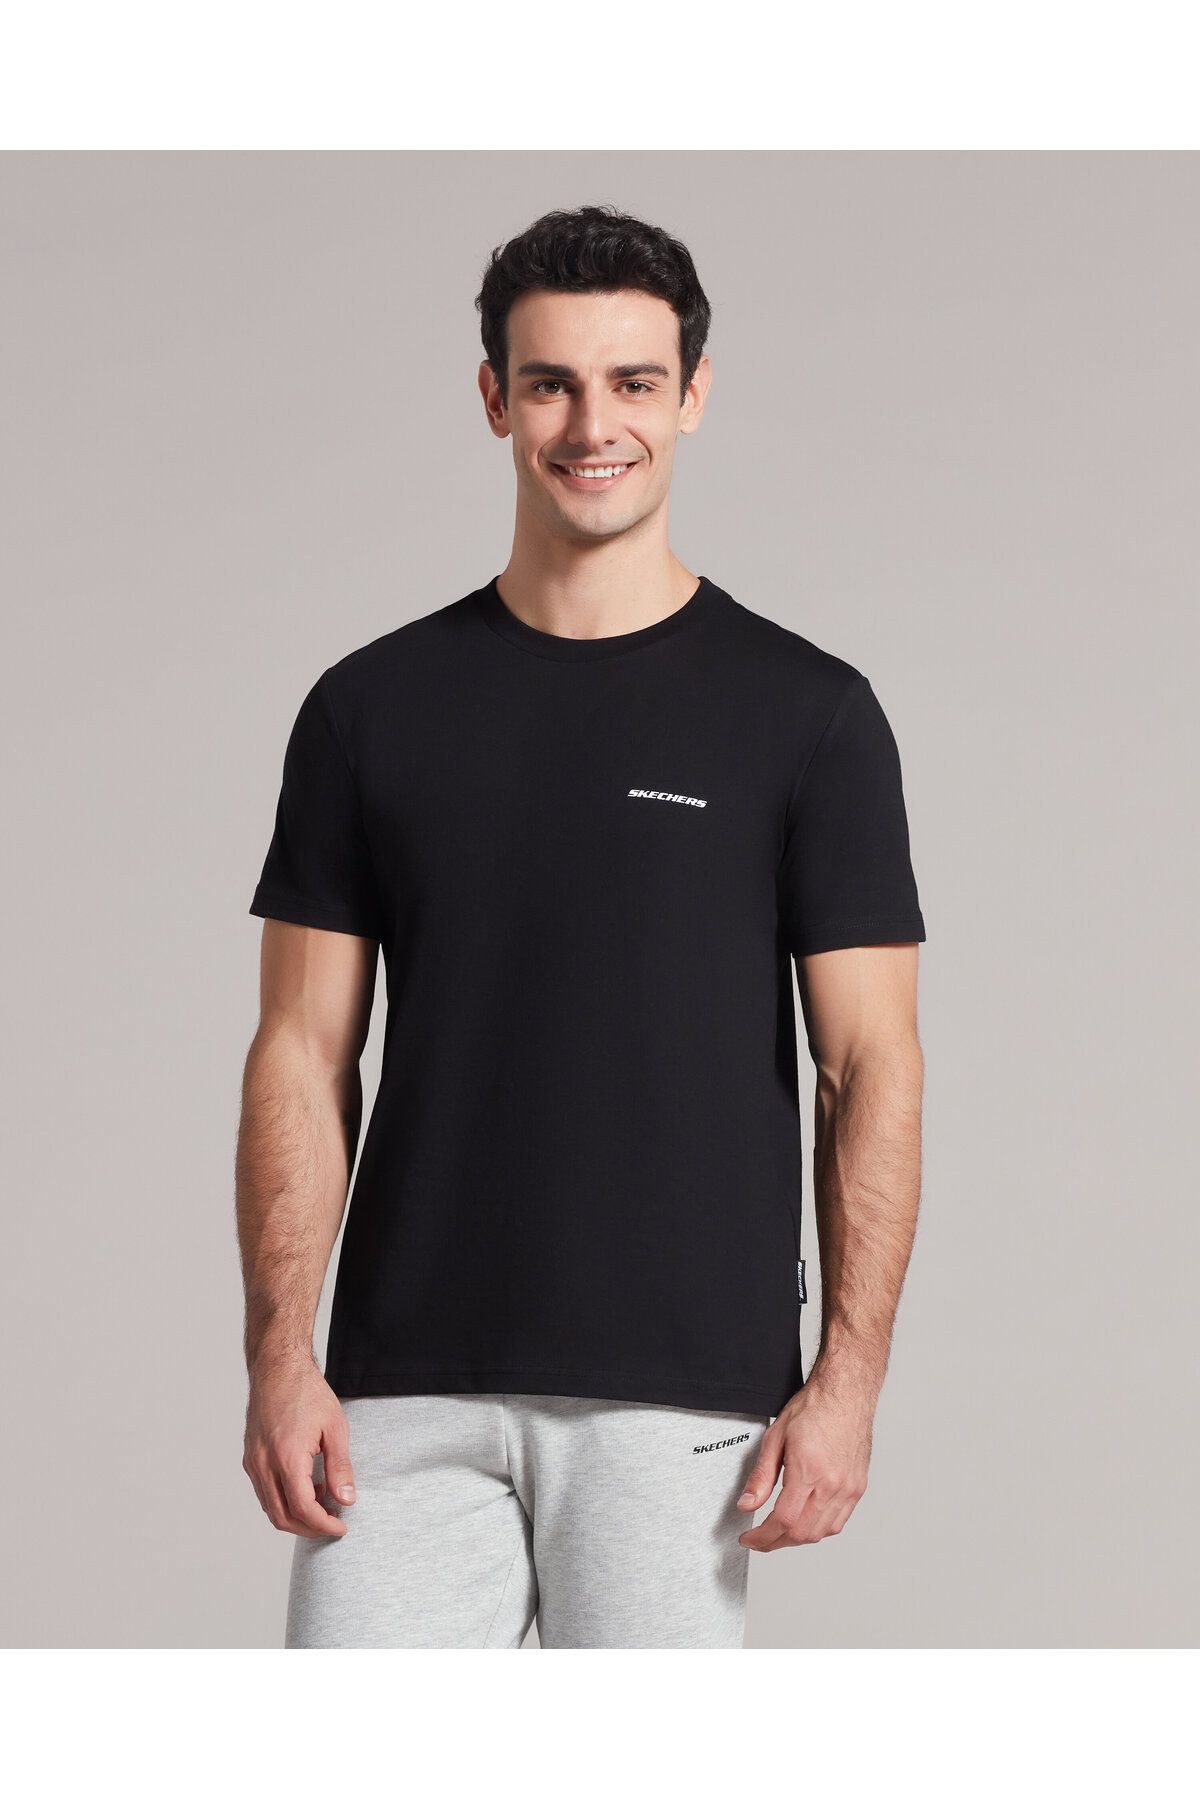 Skechers M New Basics Crew Neck T-shirt Erkek Siyah Tshirt S212910-001